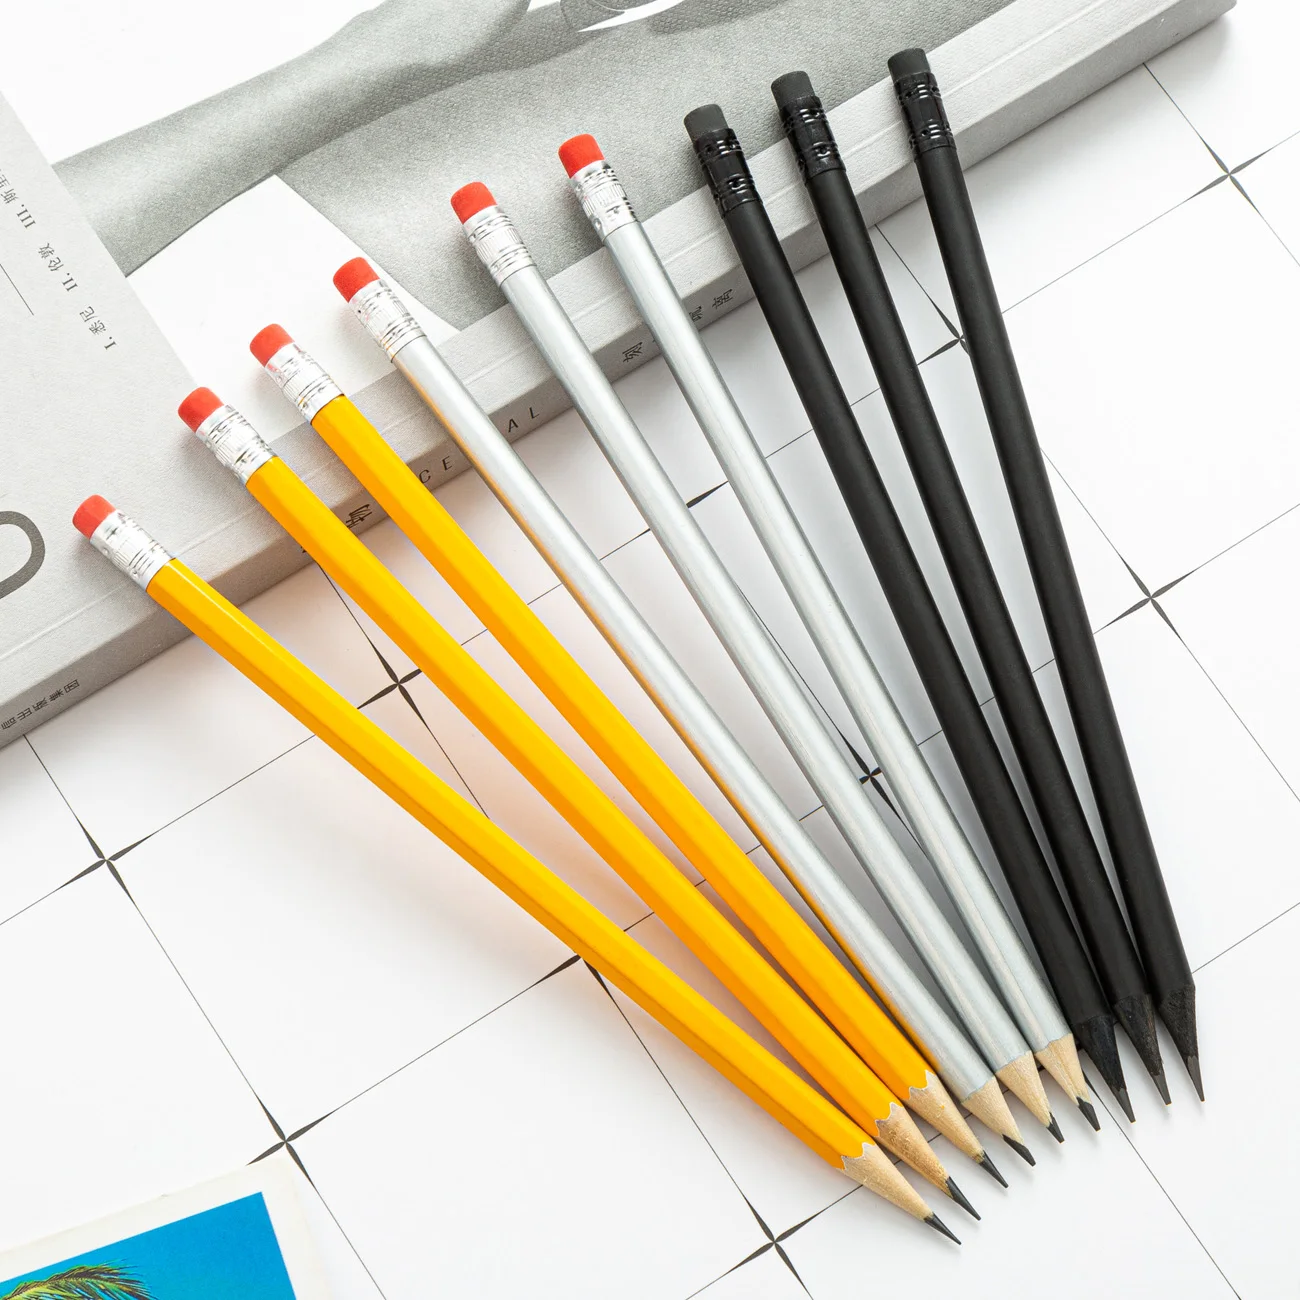 
Promotion Custom logo printed Black wooden Multi-color pencil HB Pencil with Eraser 